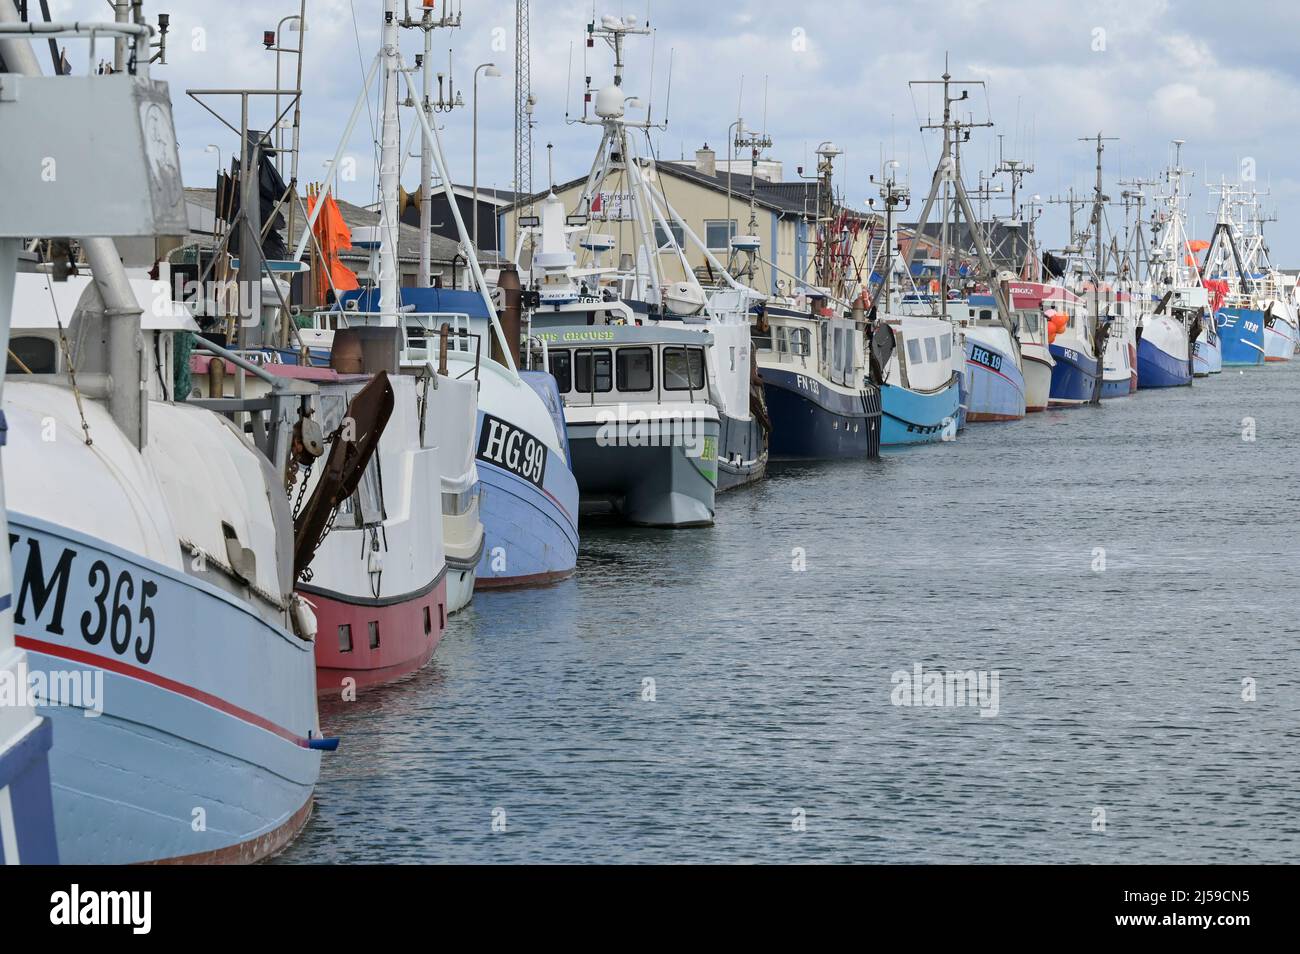 DANEMARK, Jutland, Hirtshals, Port de pêche de la mer du Nord avec bateaux de pêche / DÄNEMARK, Jütland, Hirtshals, Nordsee Hafen, Fischerboote Banque D'Images